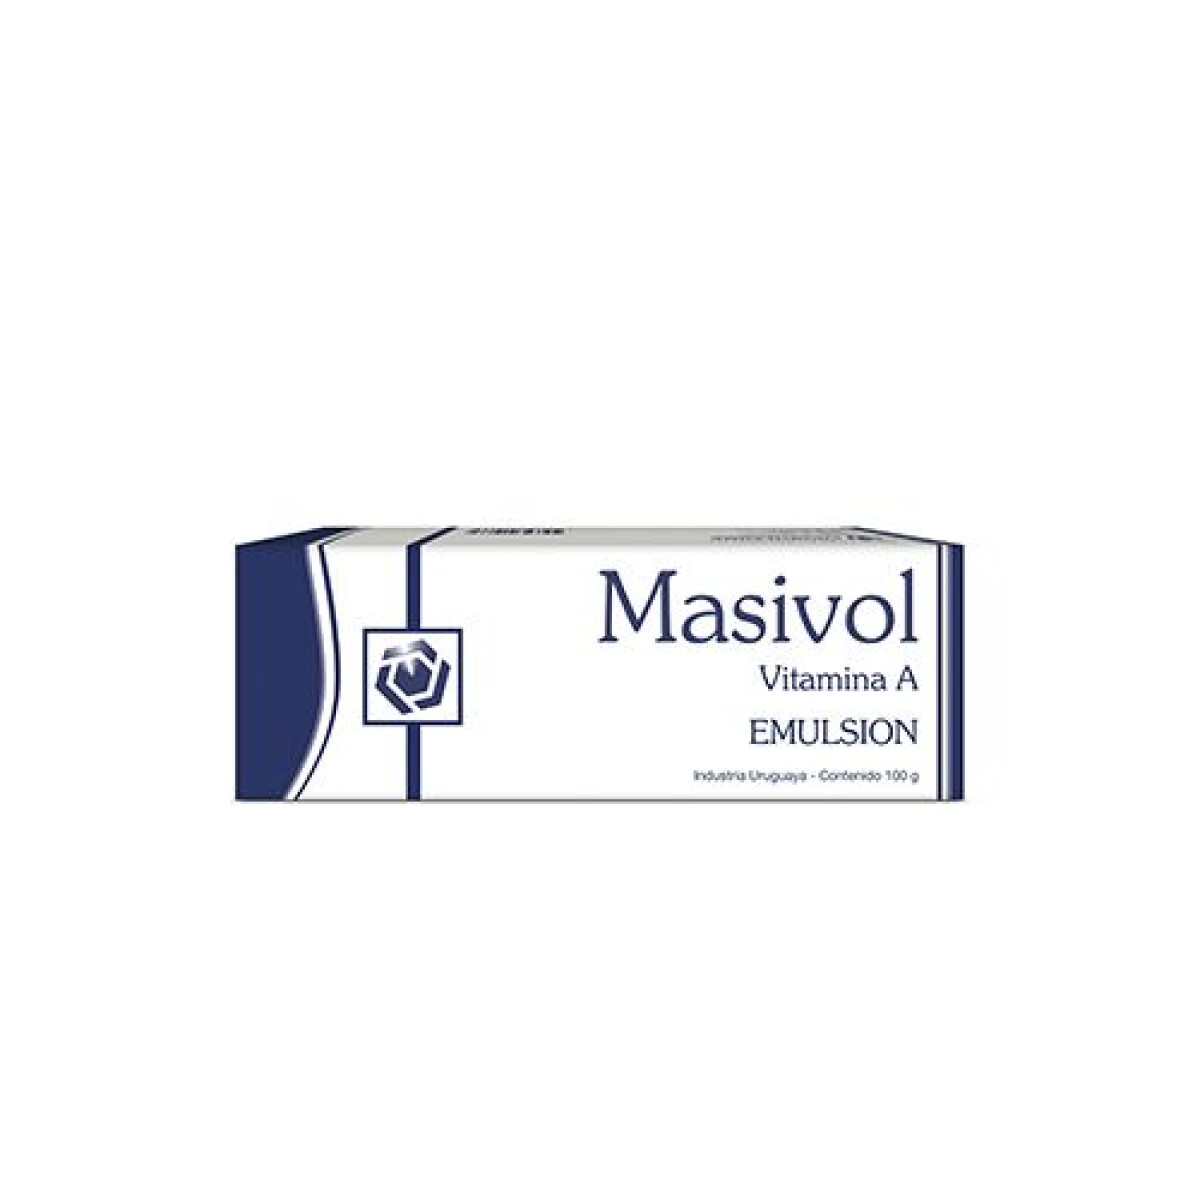 MASIVOL CREMA 50 GR 